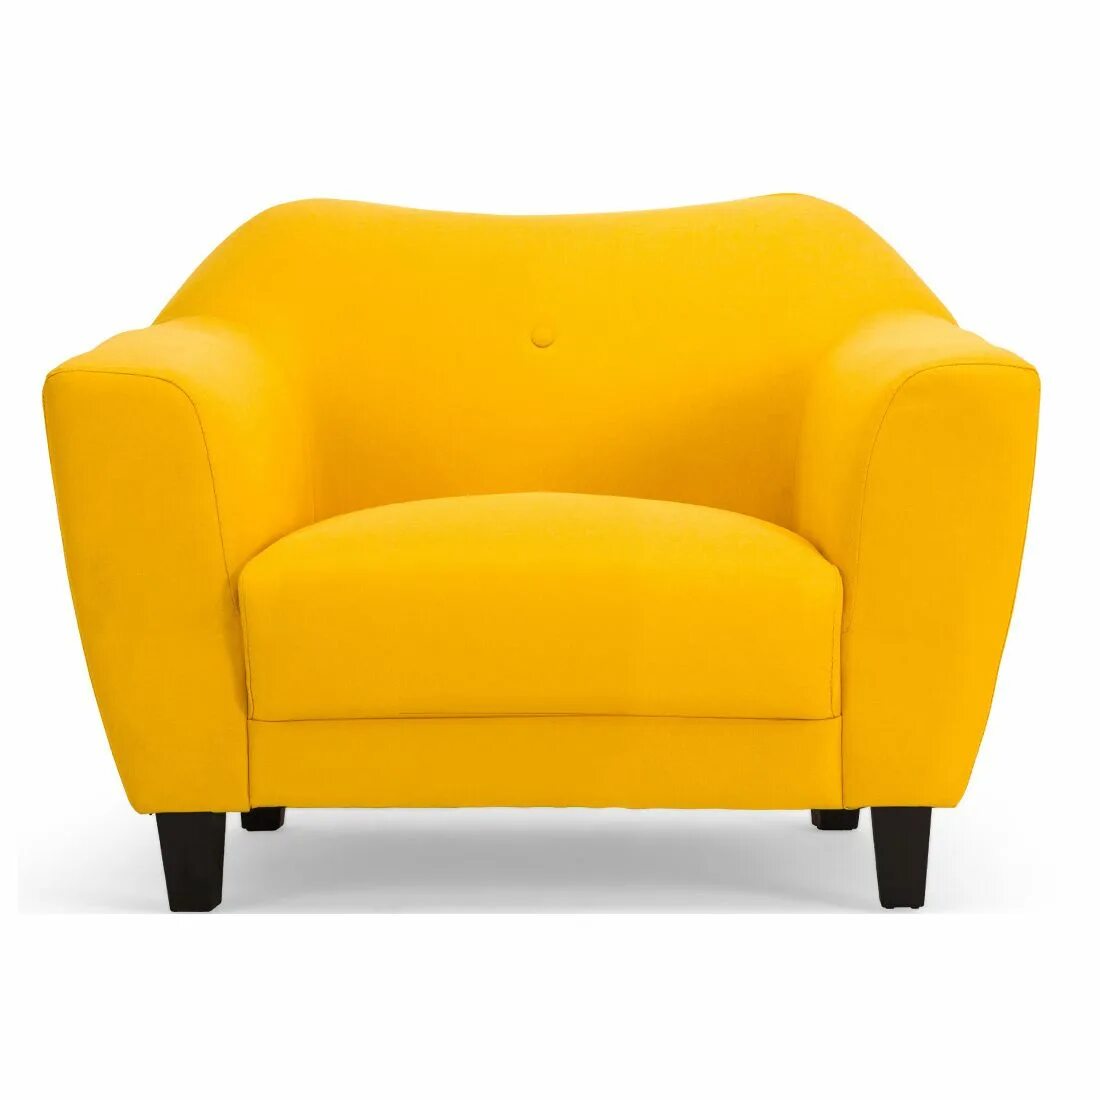 Желтое кресло. Желтый диван и кресло. Большое желтое кресло. Кресло желтого цвета. Next to the armchair